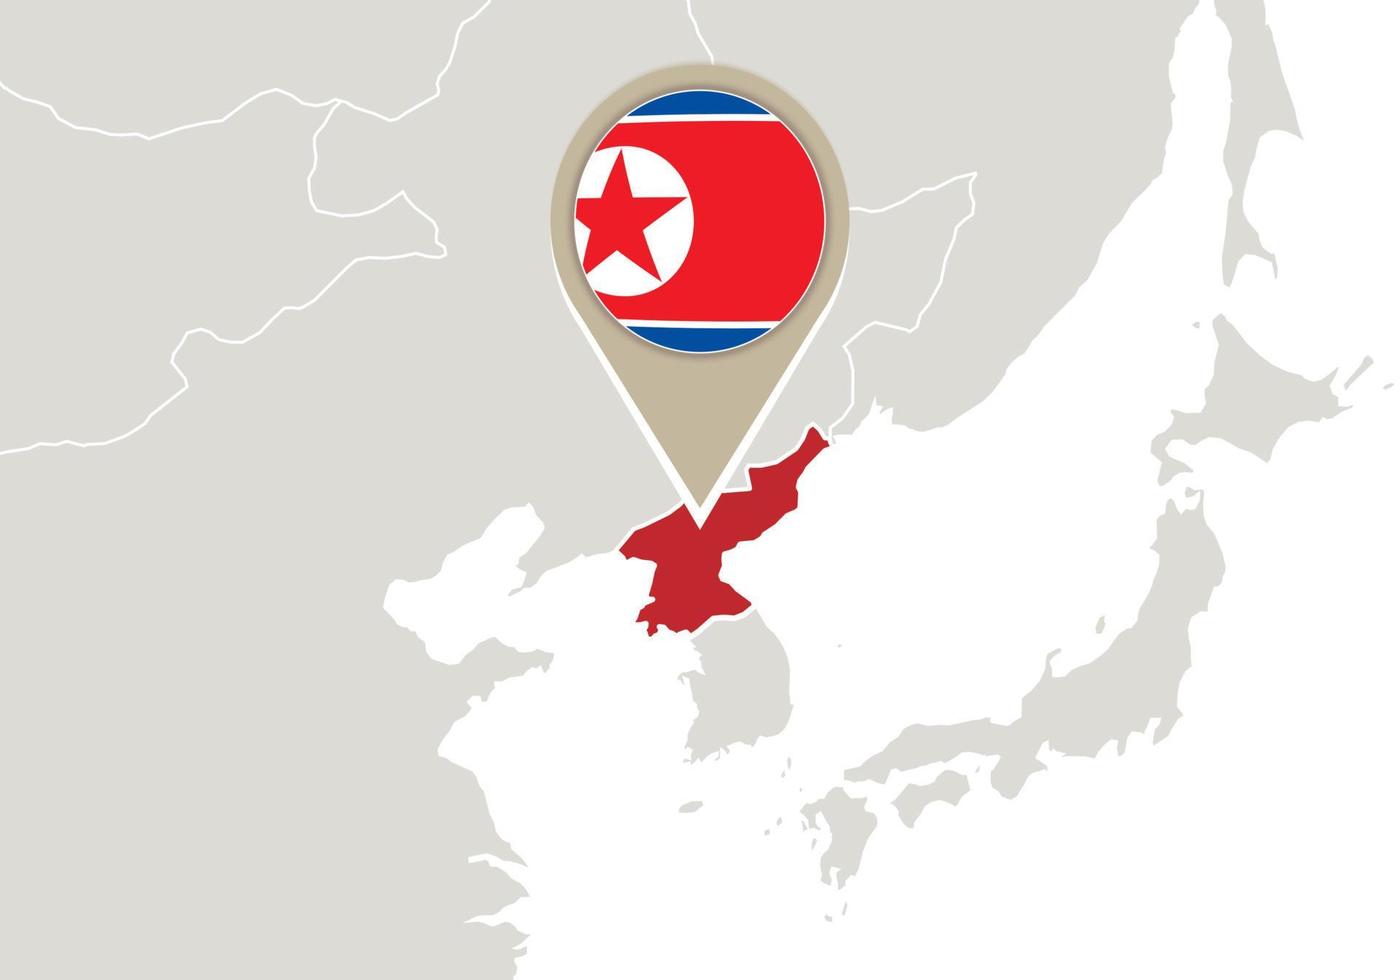 North Korea on World map vector